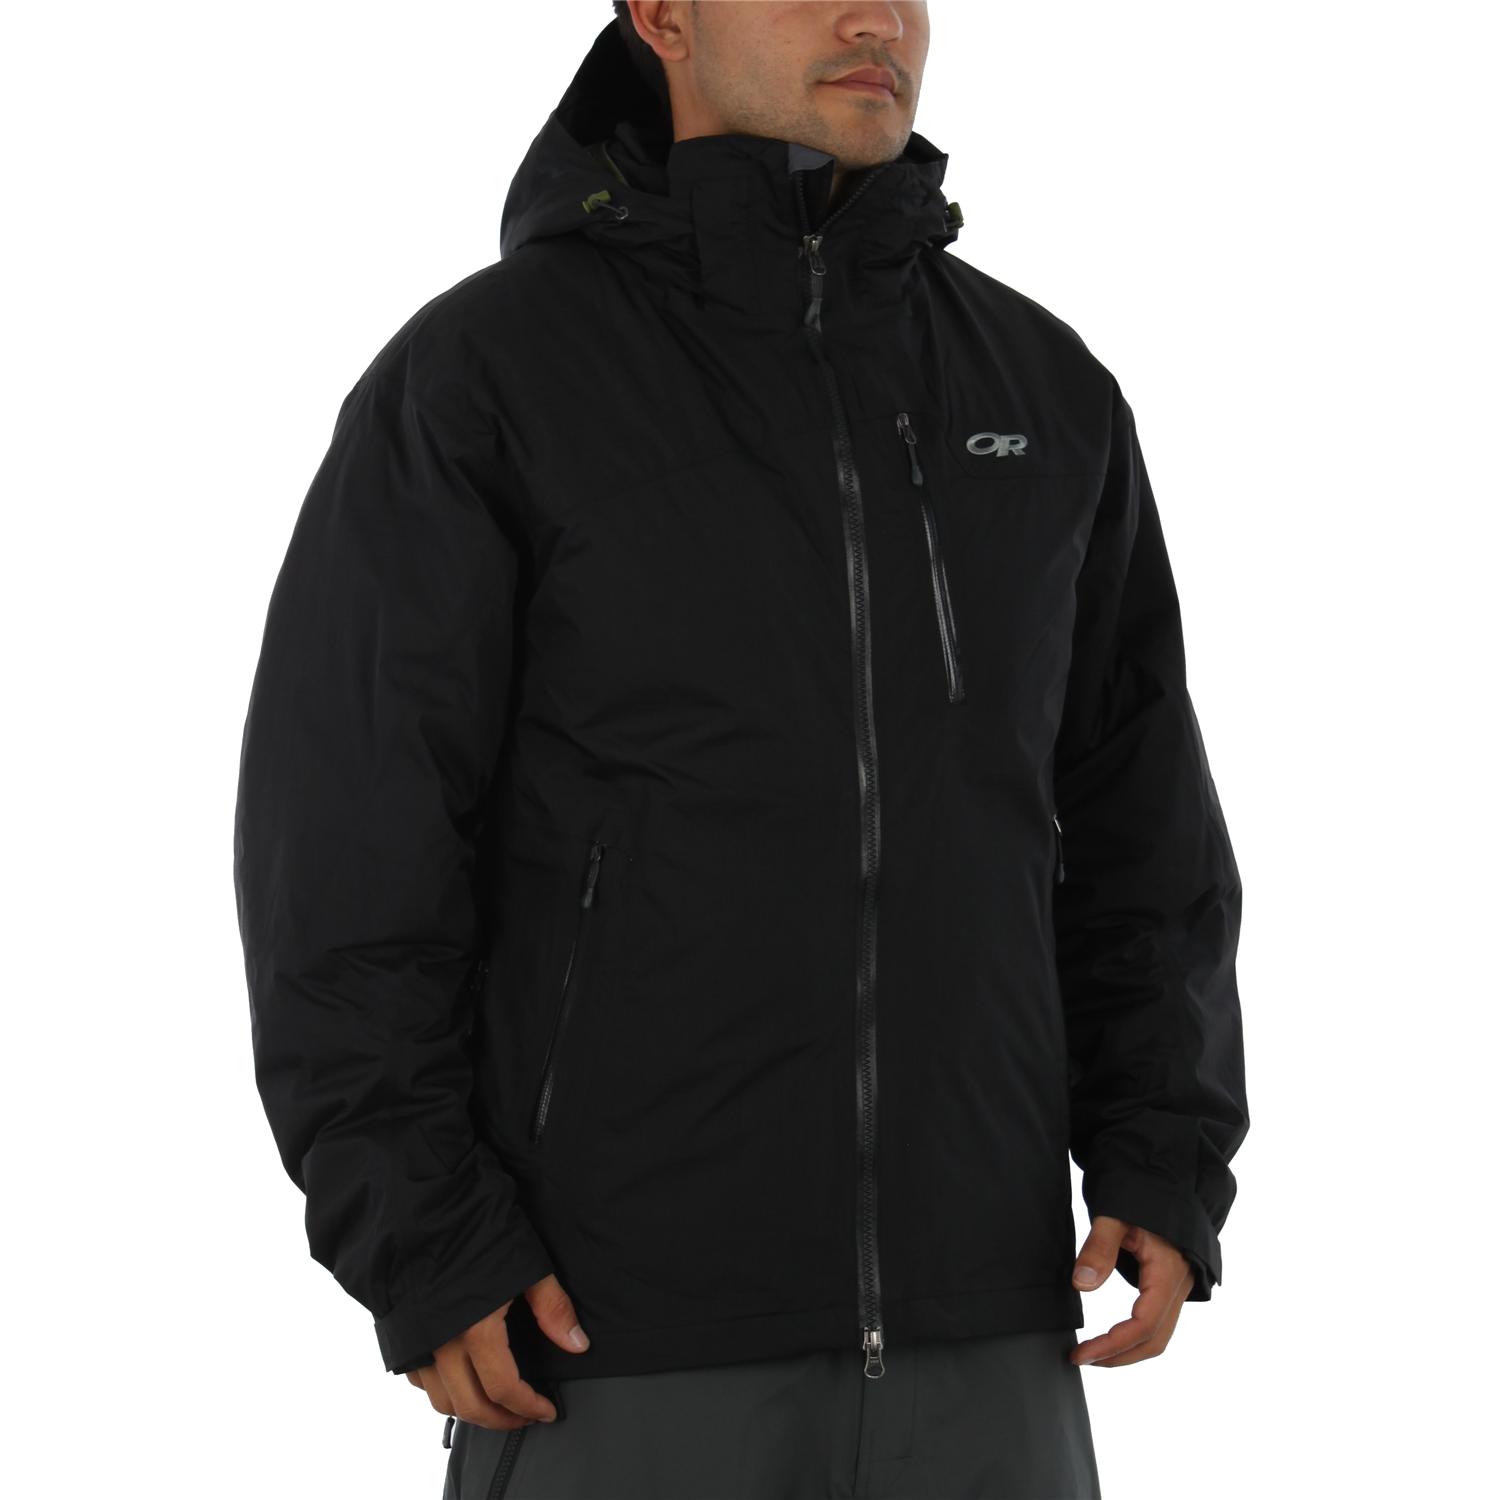 Outdoor Research - Мужская куртка для путешествий Stormbound Jacket